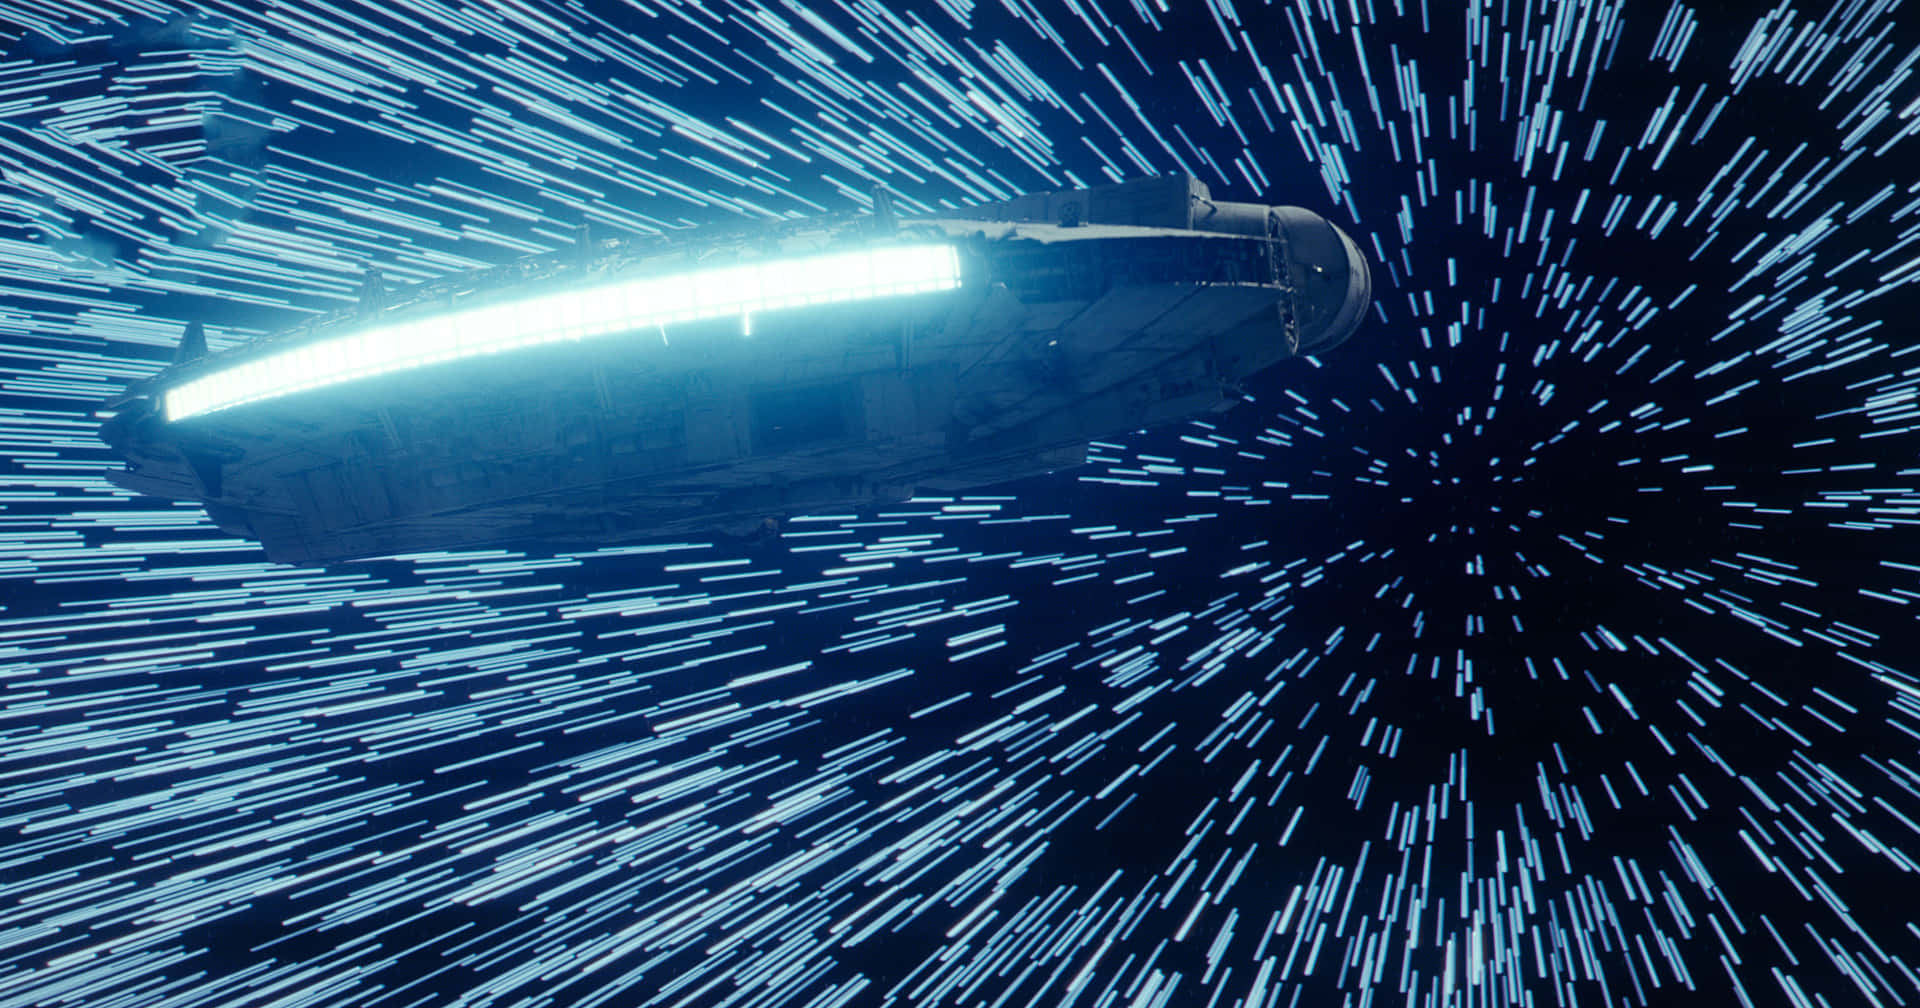 Star Wars' legendariske skib Millennium Falcon på skyerne Wallpaper